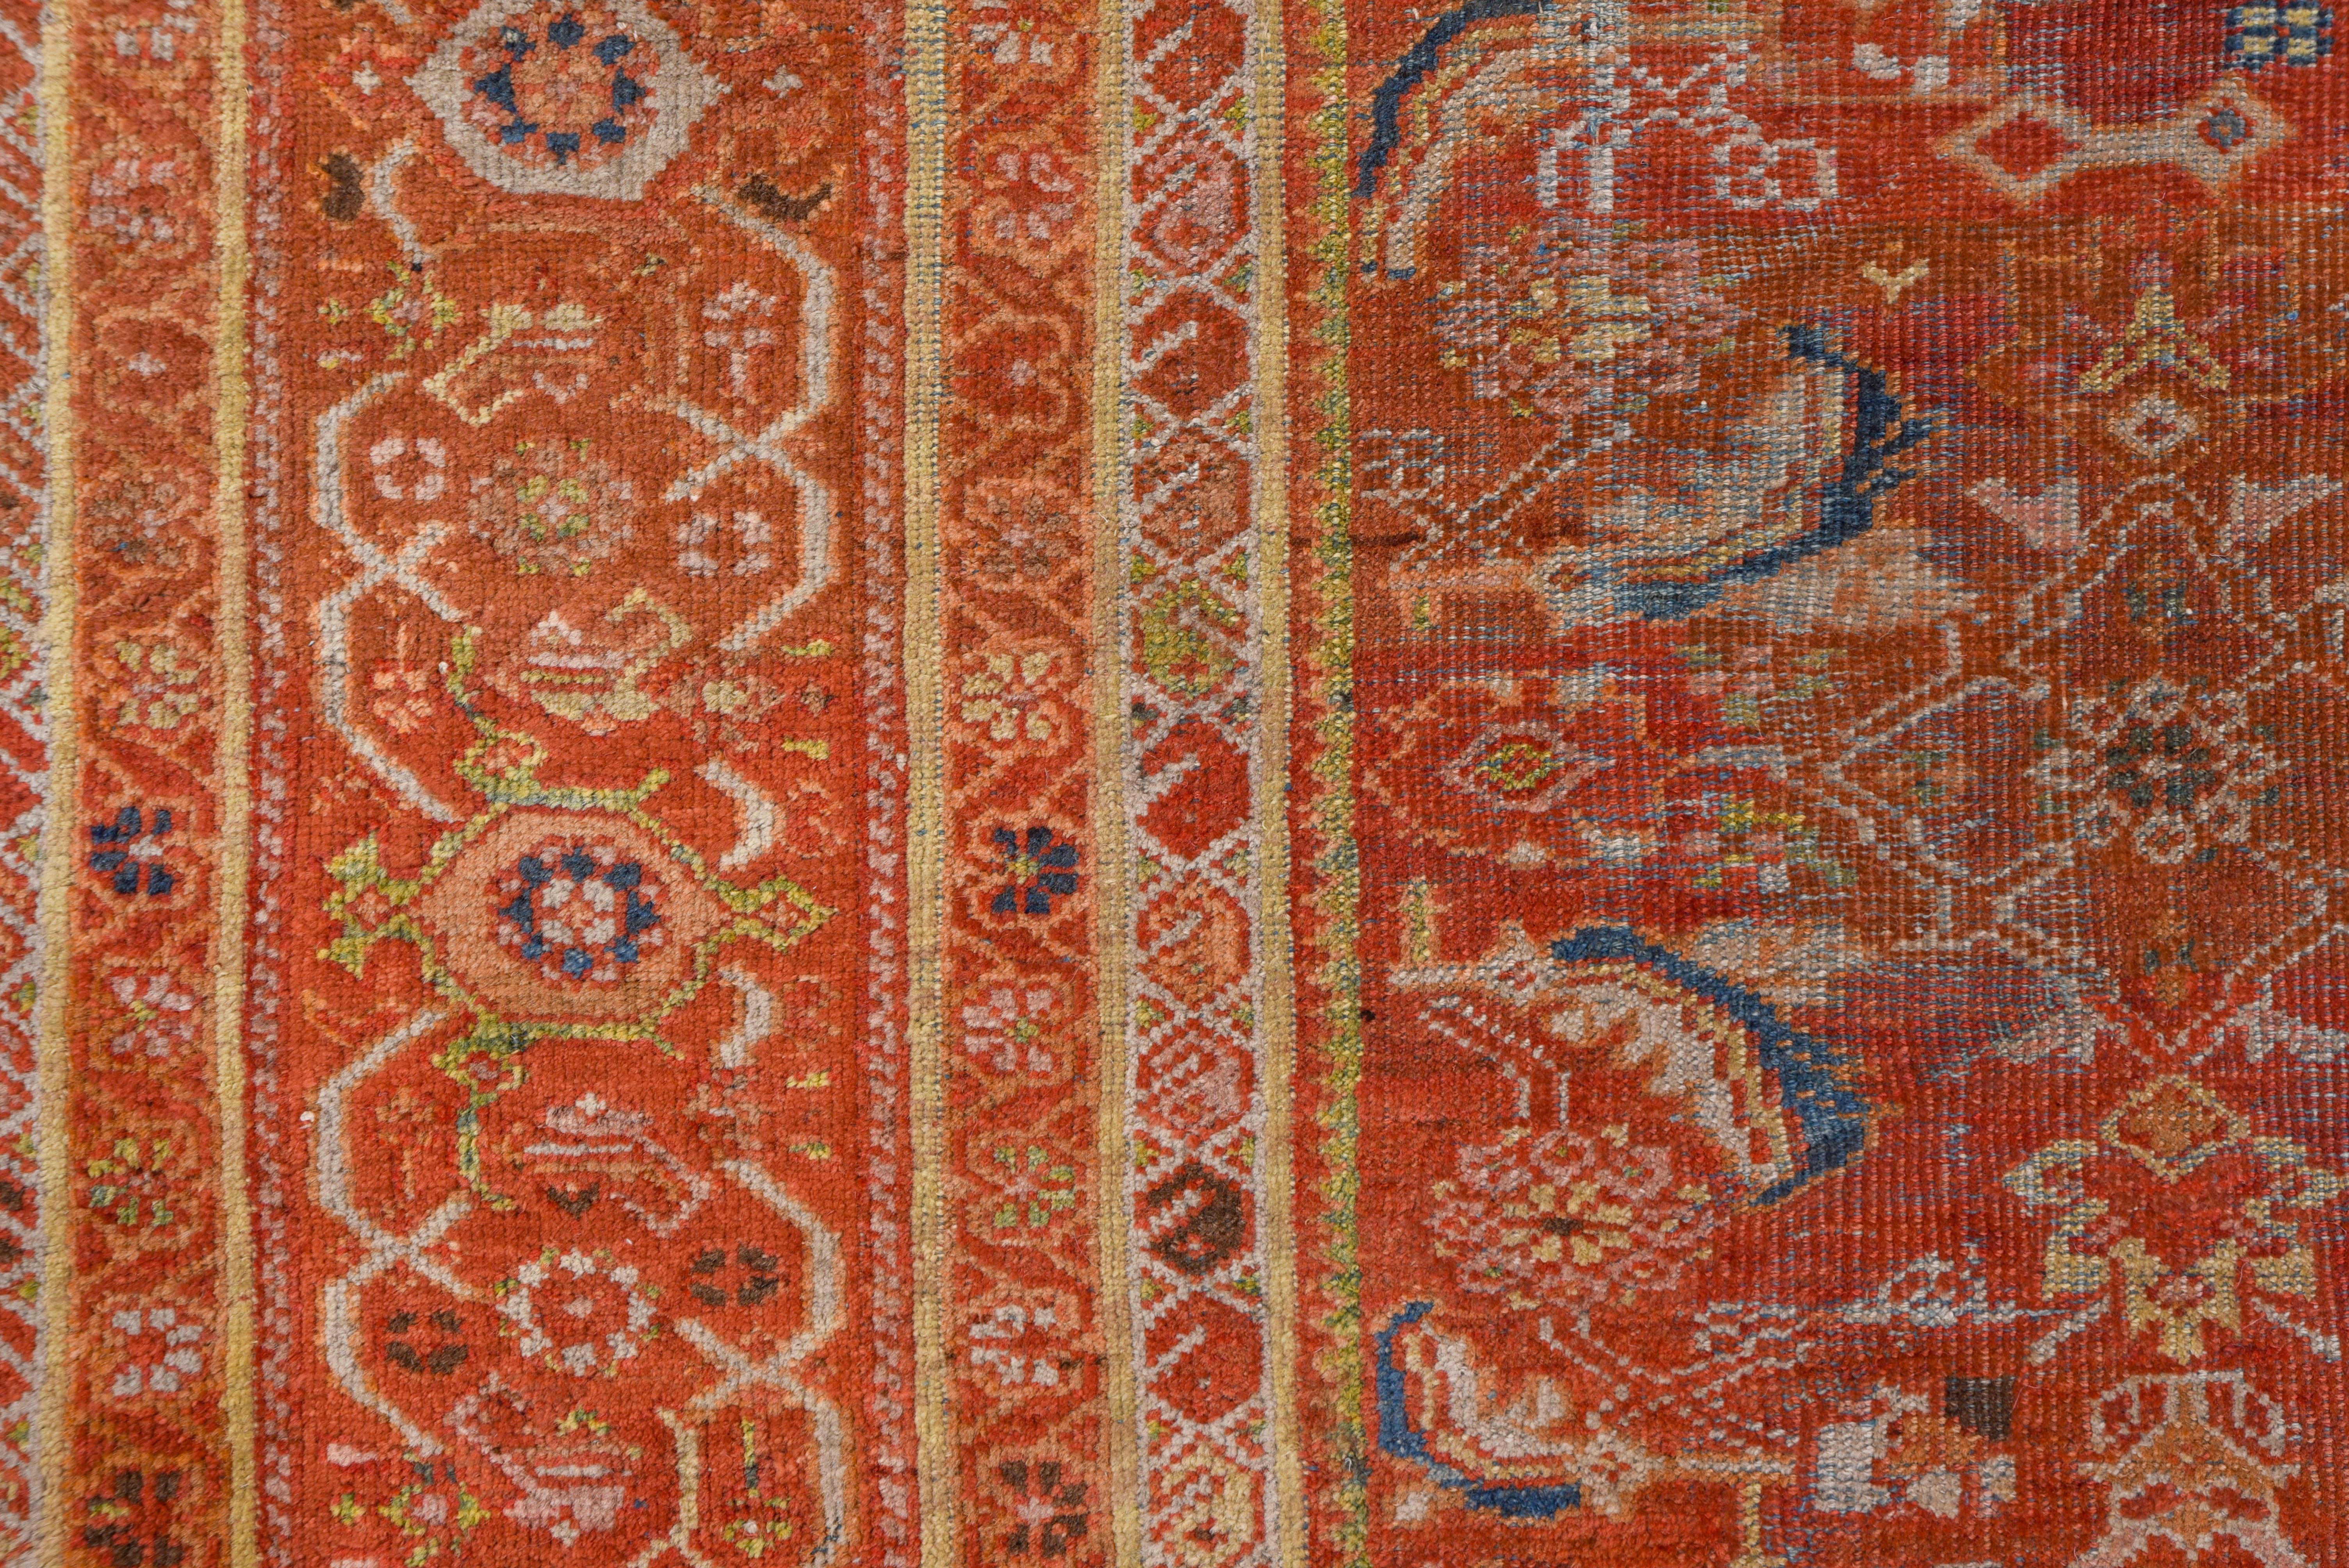 Hand-Knotted Orange Antique Persian Mahal Carpet, circa 1930s